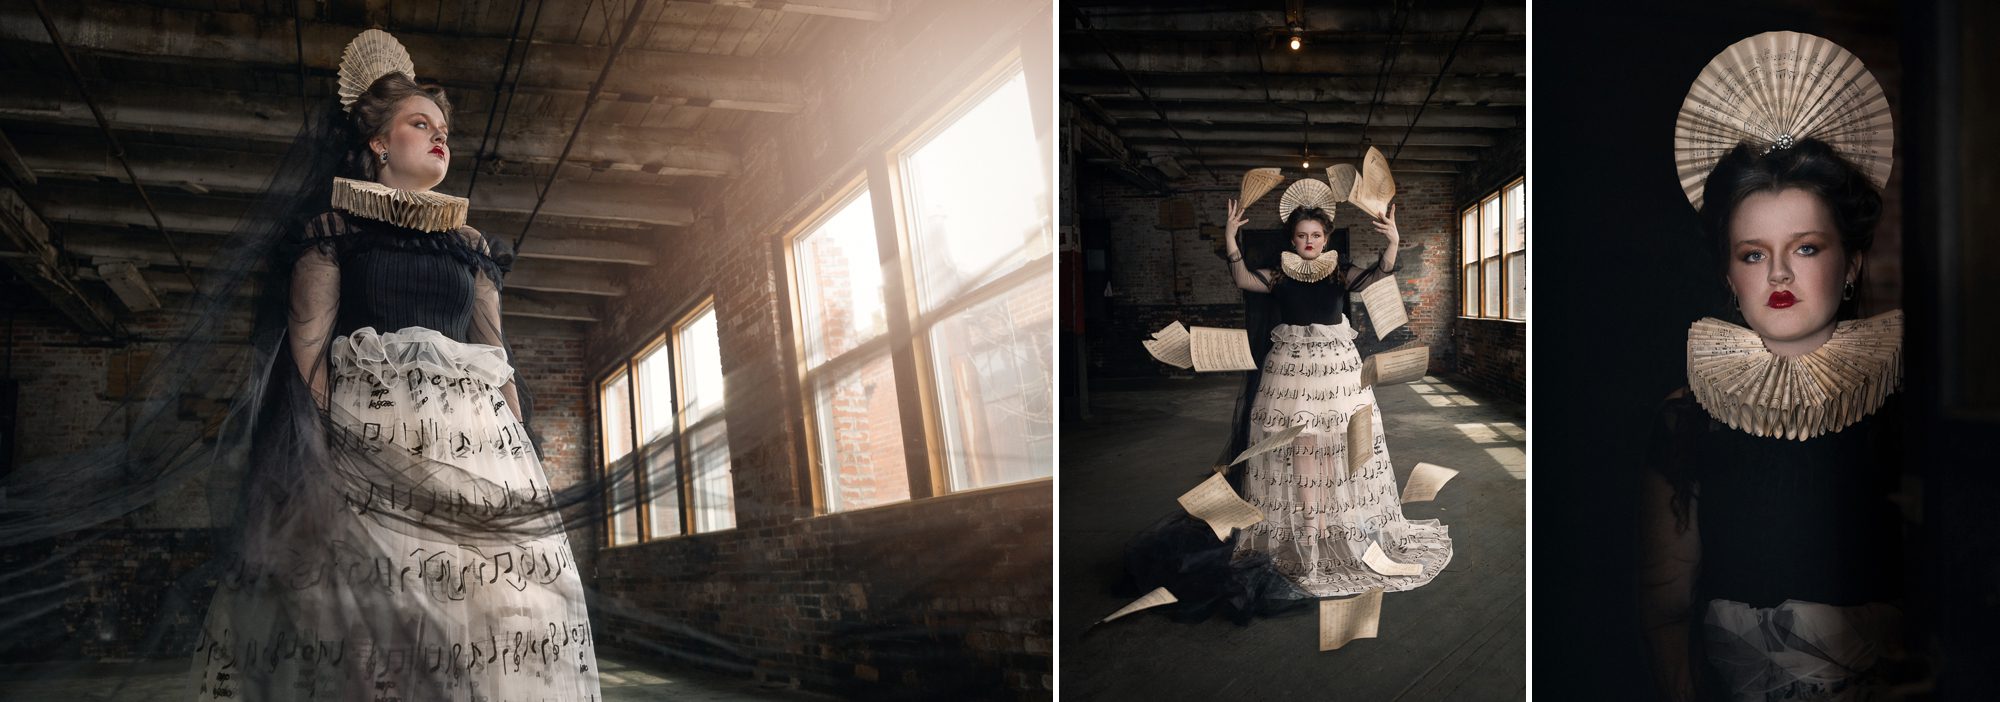 Musician creative styled photos in urban warehouse